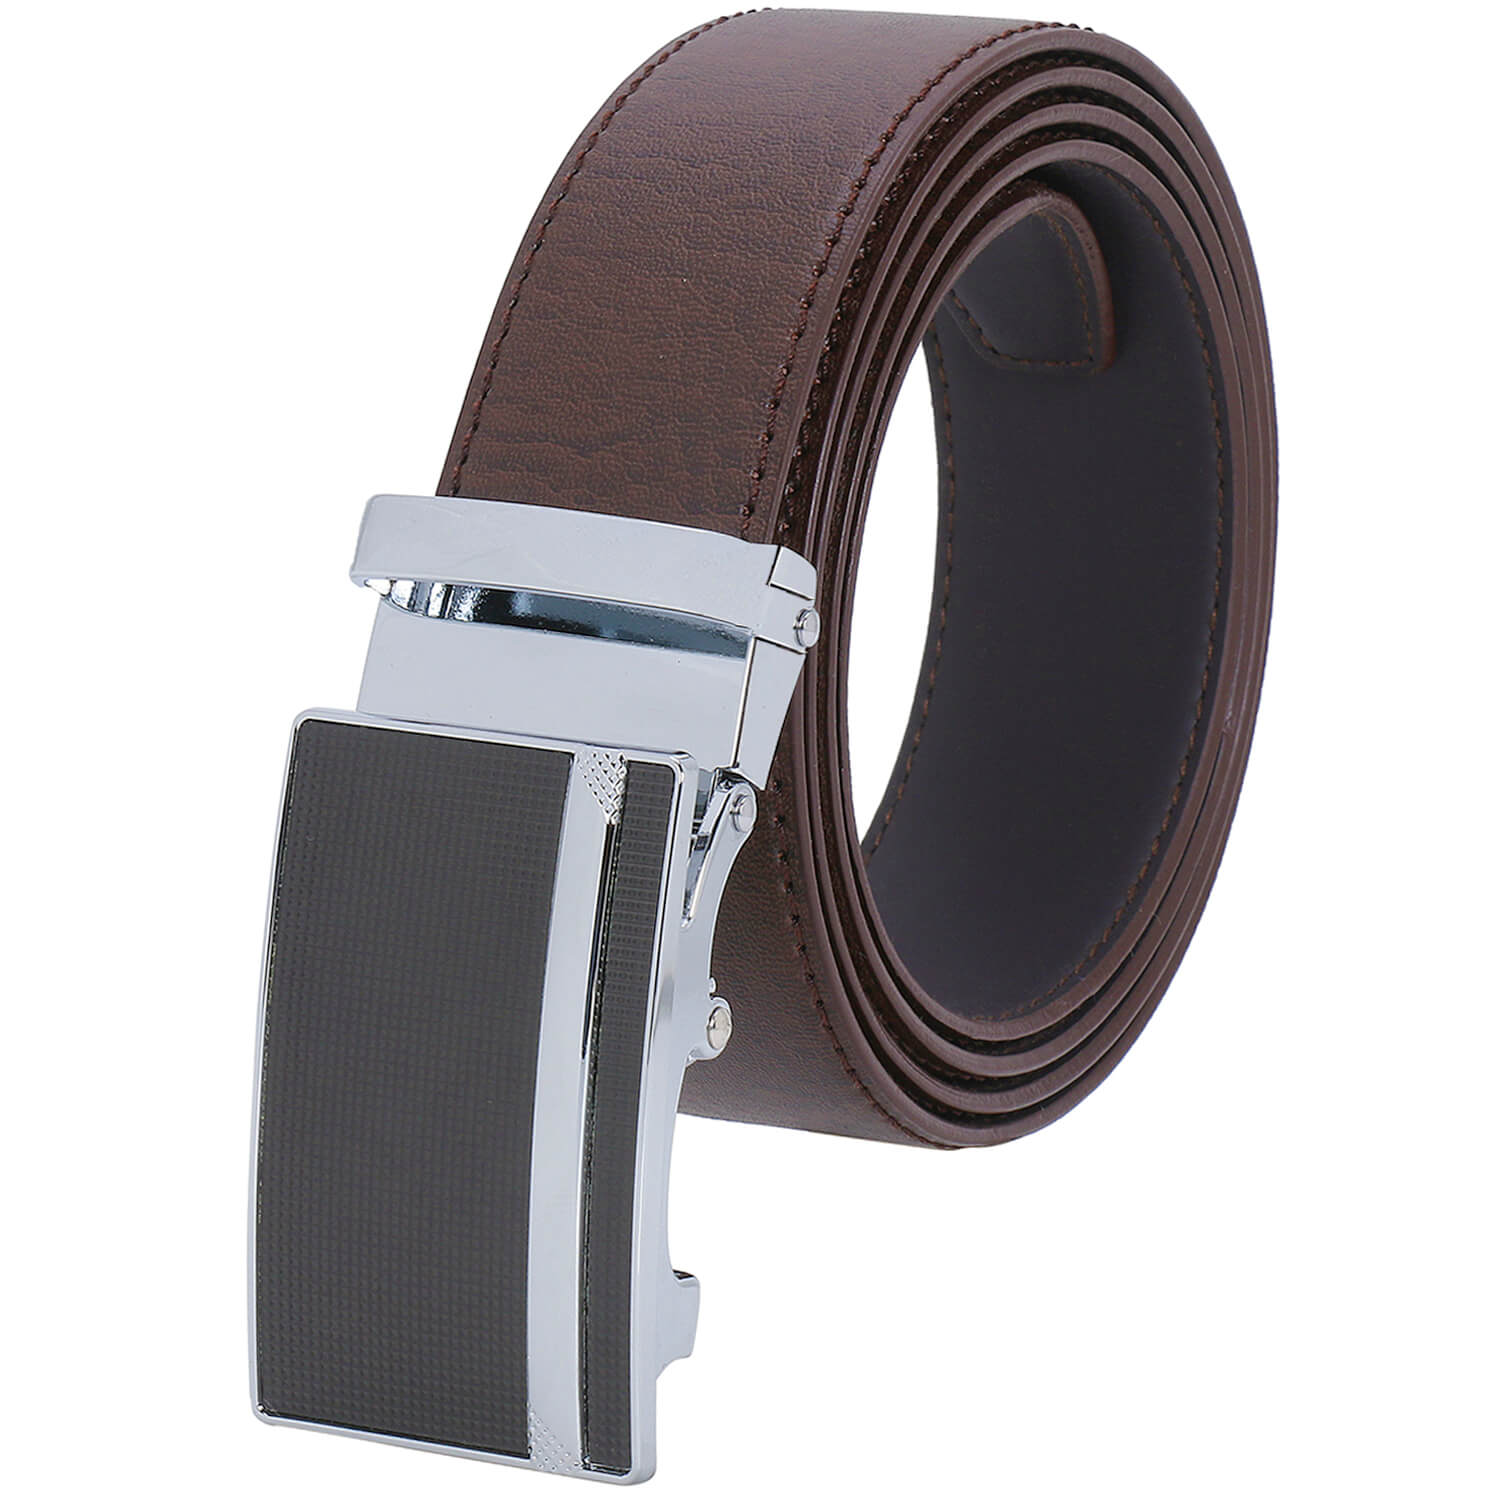 Labnoft Men's Stylish Auto-Lock Pu Leather Belt Without Holes, Brown